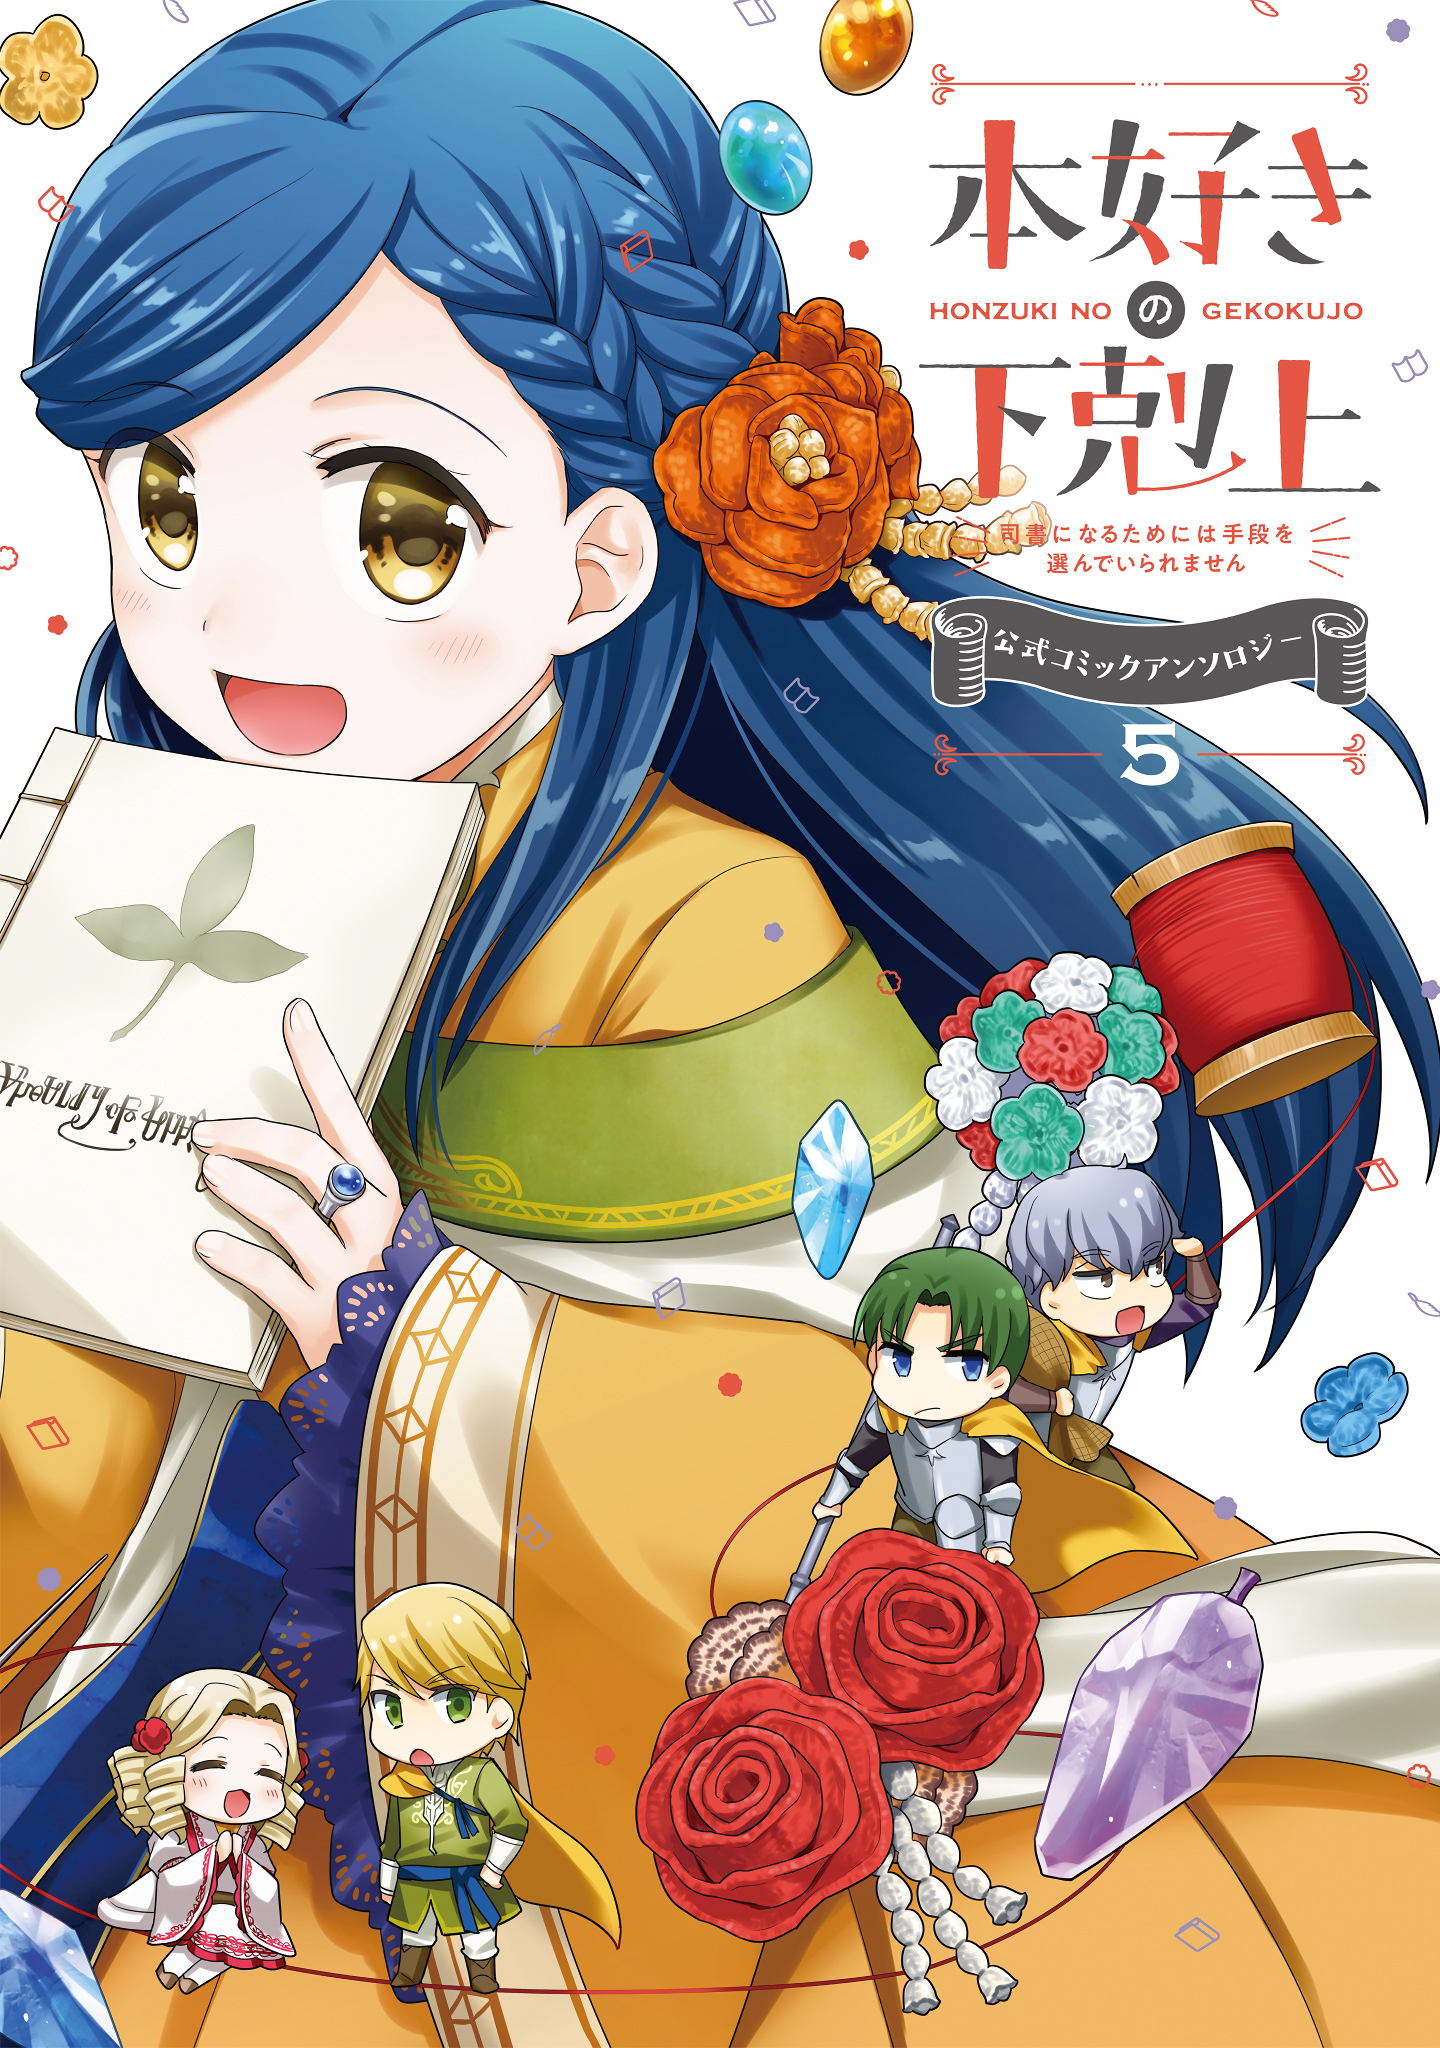 Honzuki no Gekokujo Part 2 - Manga Version - Vol. 6 - ISBN